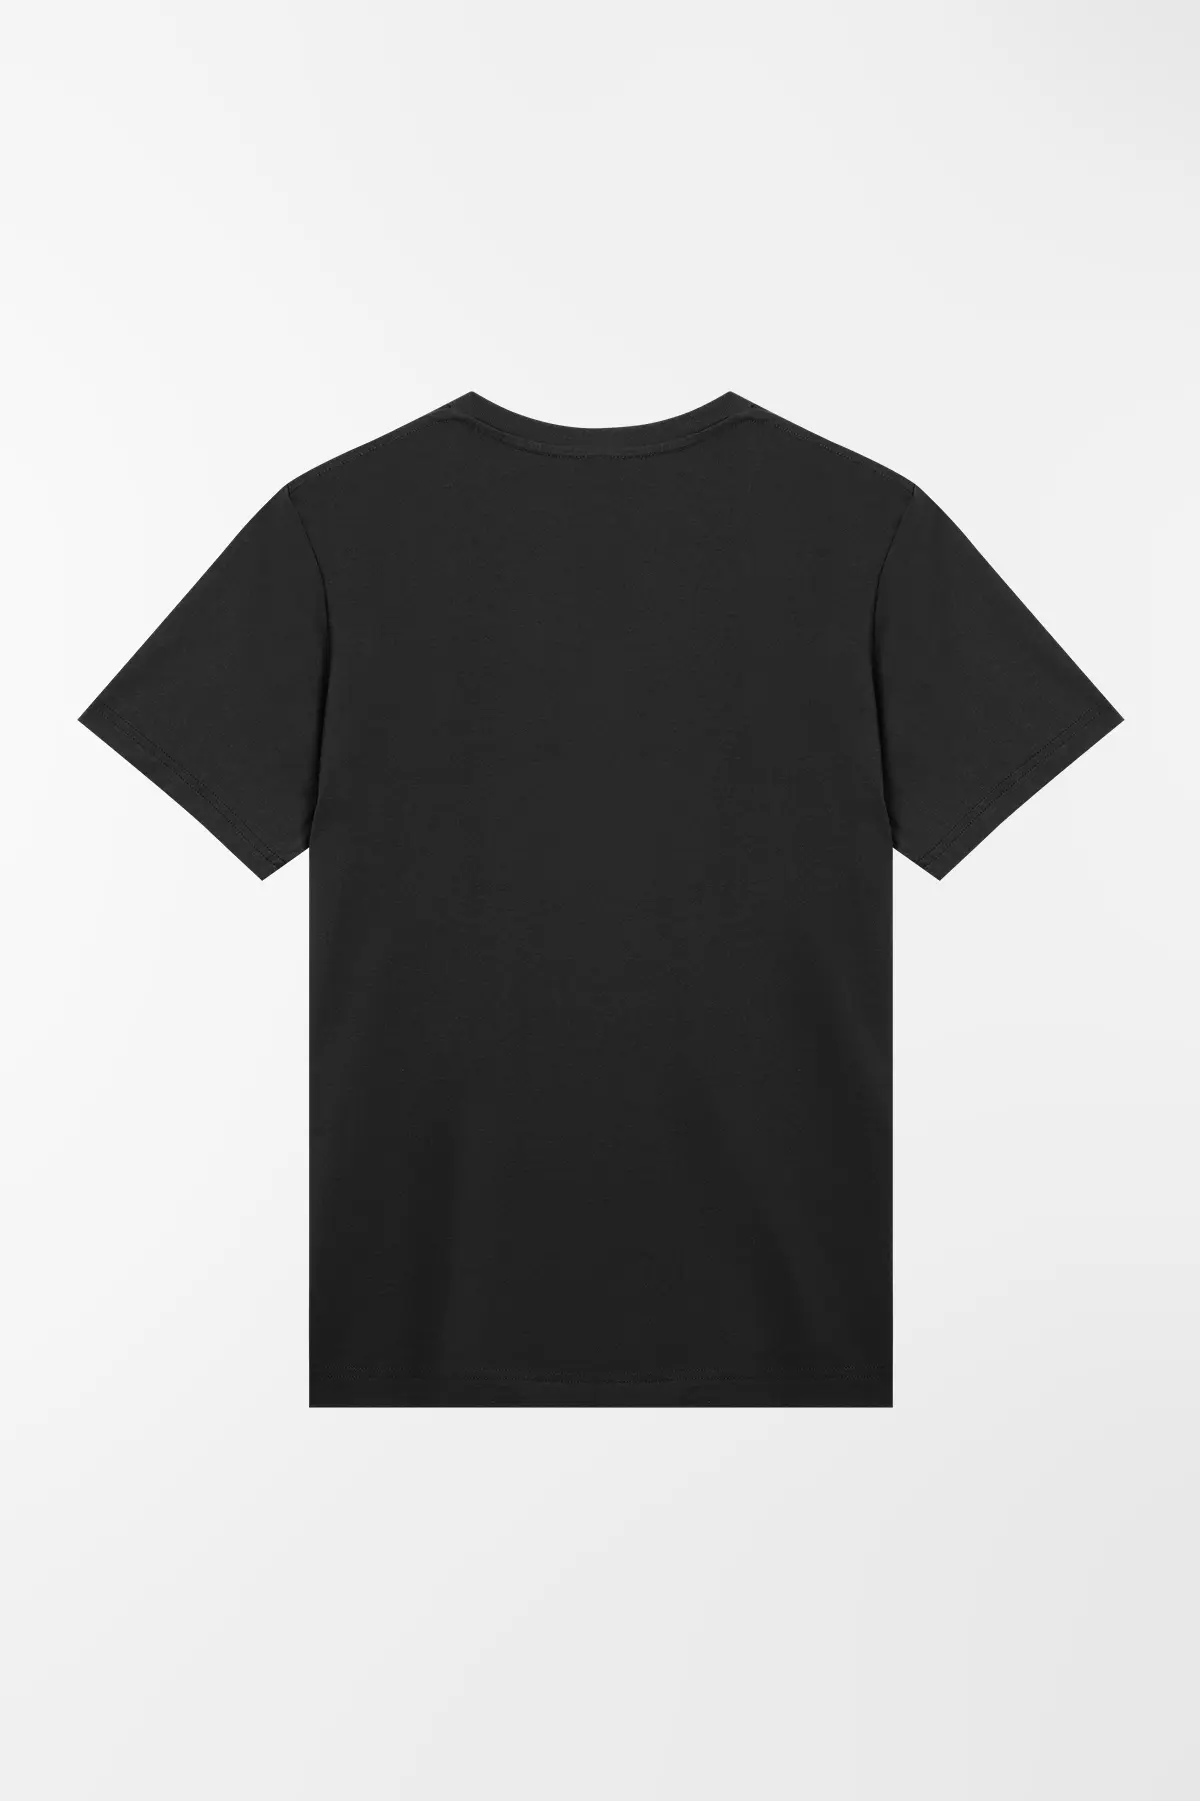 Remilia & Flandre Scarlet • Touhou T-Shirt Black